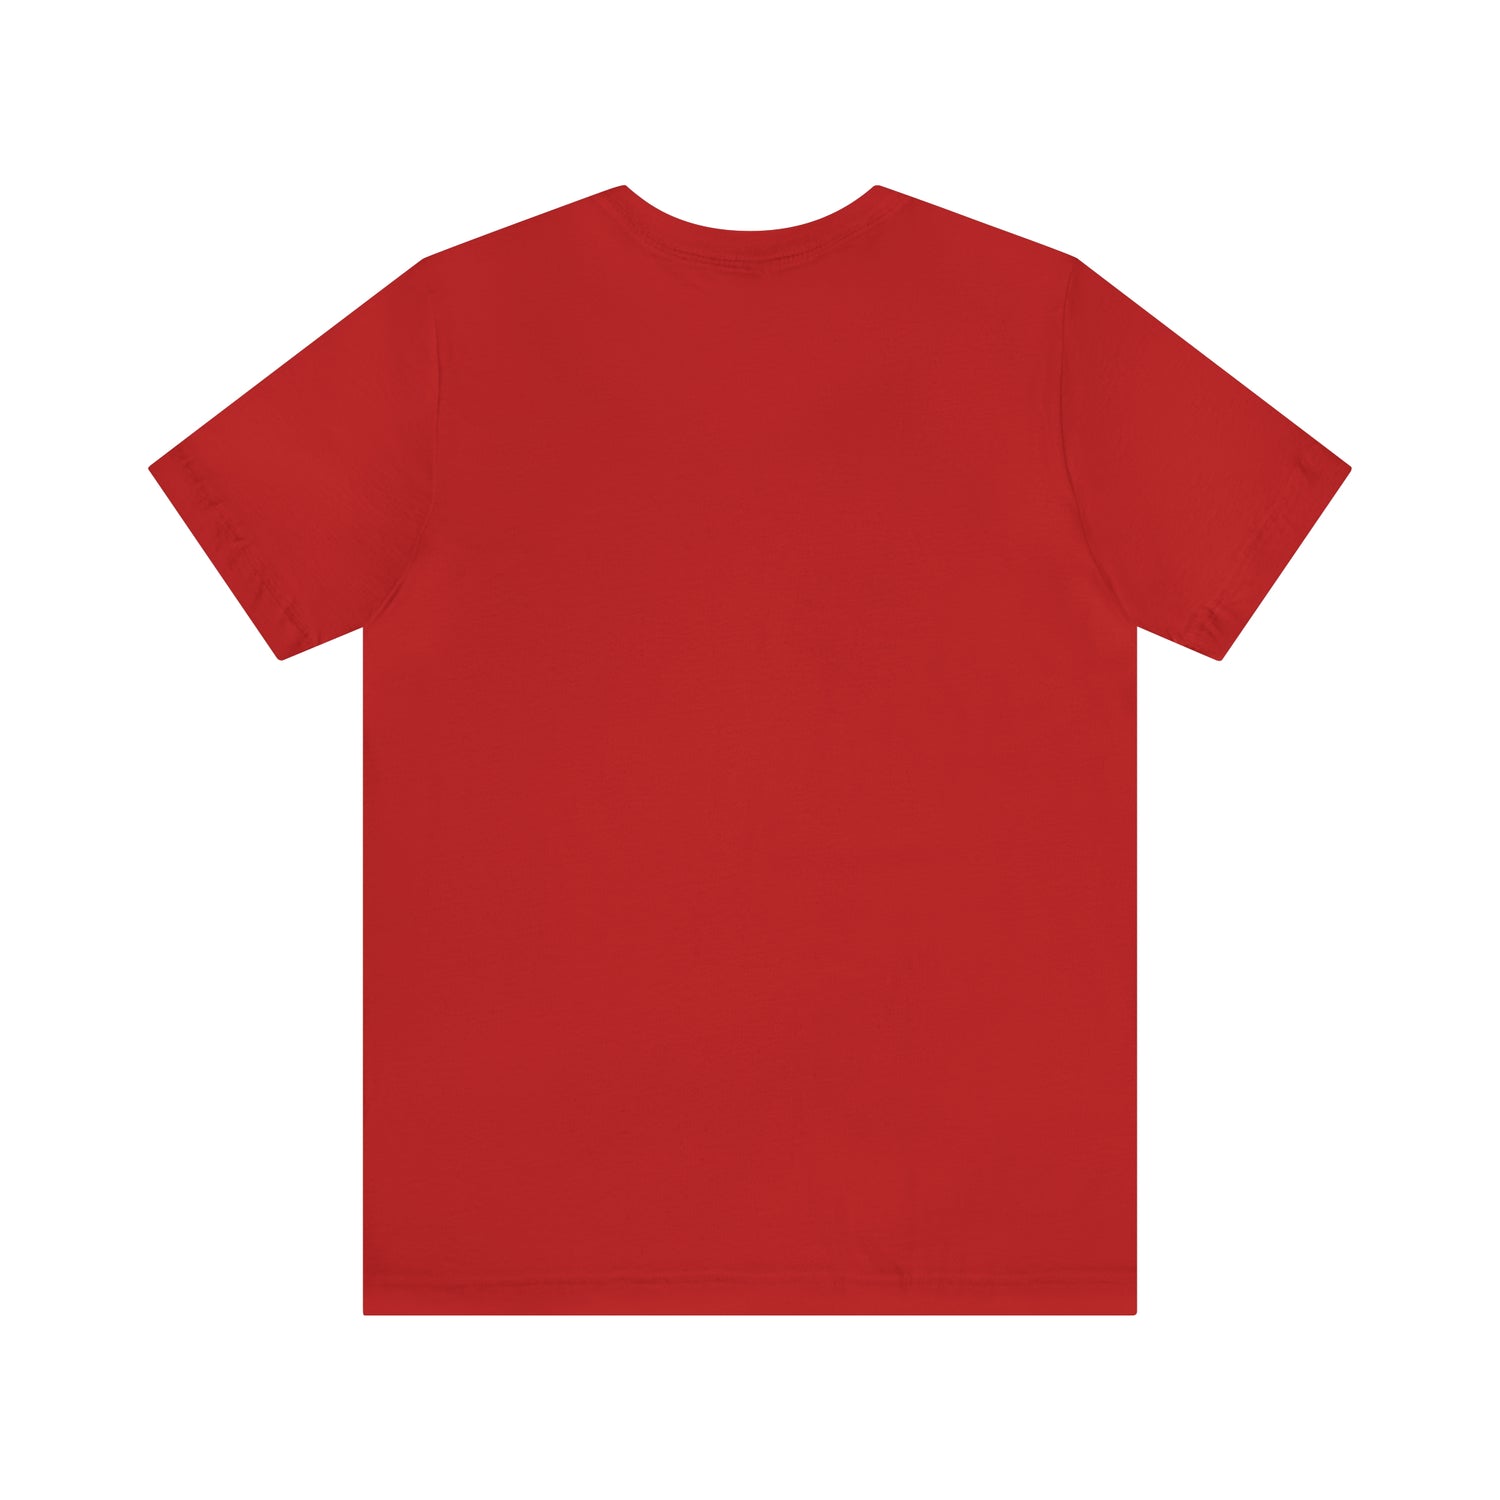 T-Shirt Tshirt Design Gift for Friend and Family Short Sleeved Shirt Hobby Aesthetic Petrova Designs